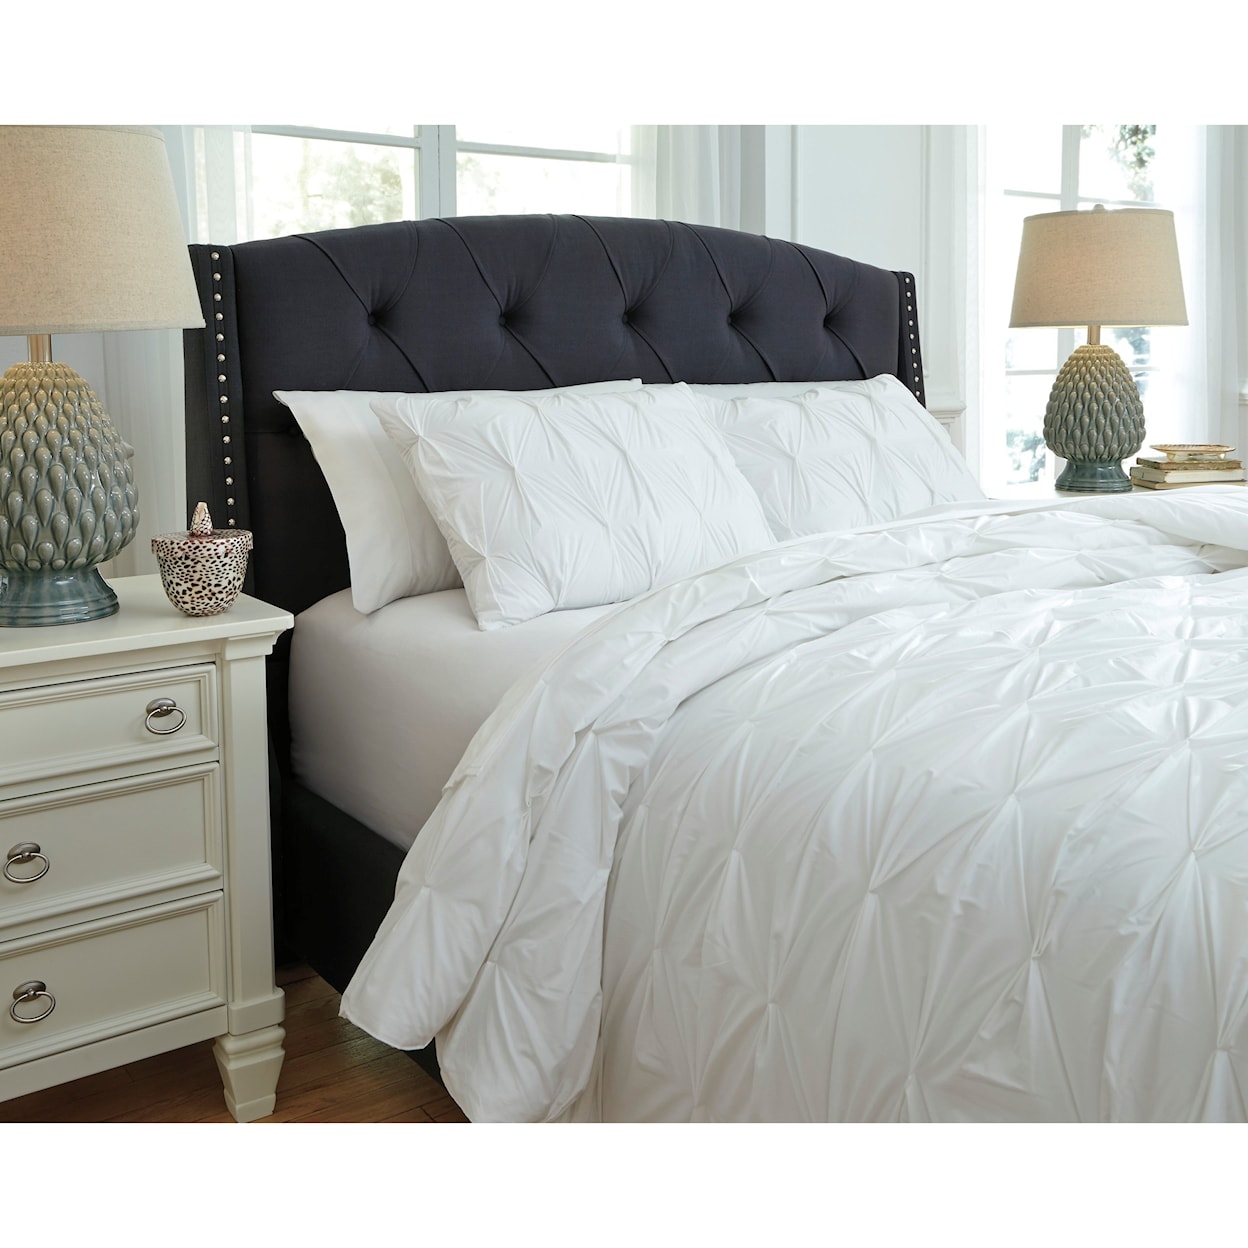 Signature Design by Ashley Bedding Sets King Rimy White Comforter Set